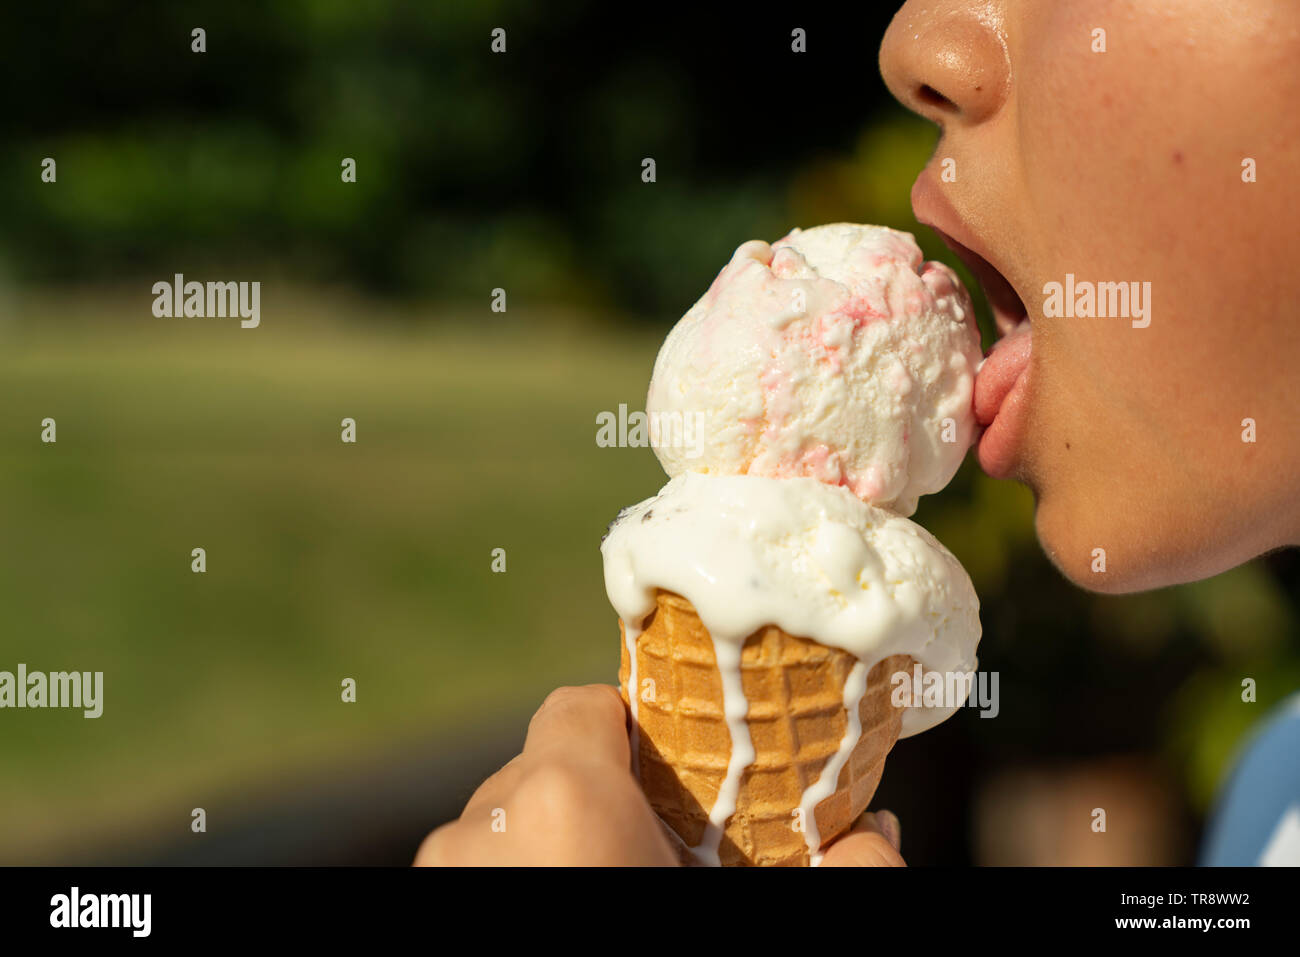 Young chinese boy eating vanilla cone ice cream Stock Photo